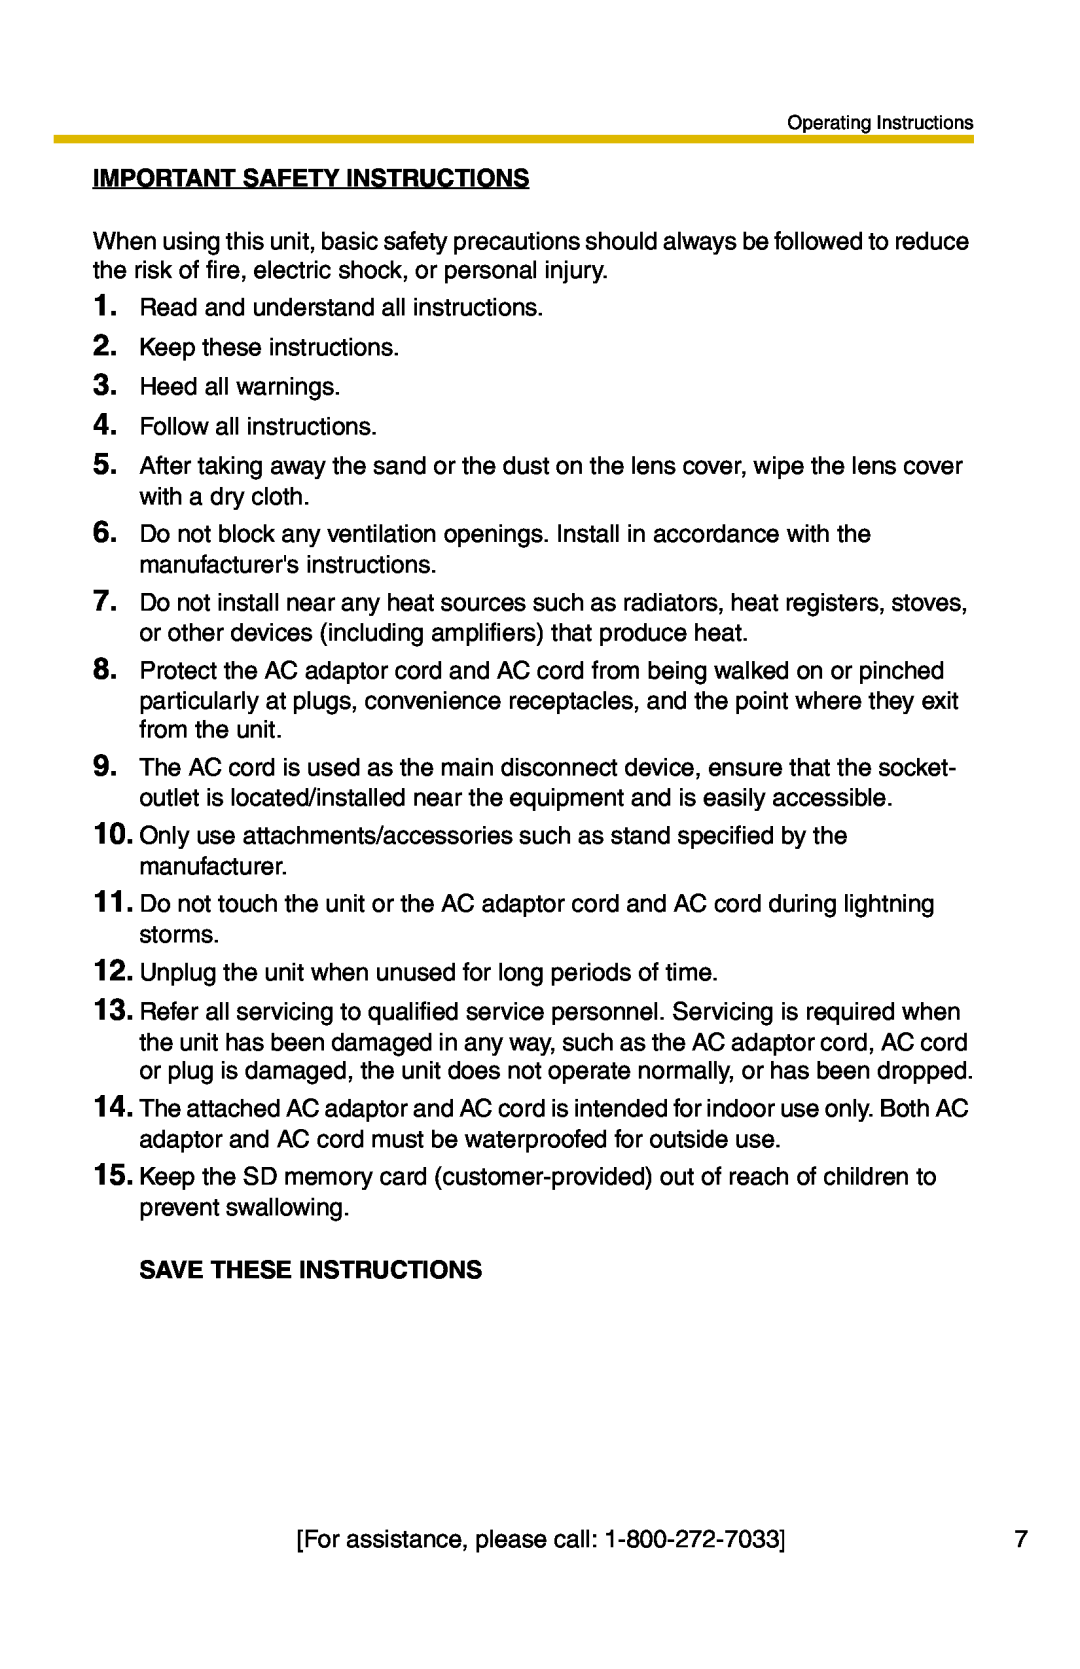 Panasonic BB-HCM331A operating instructions Important Safety Instructions, Save These Instructions 